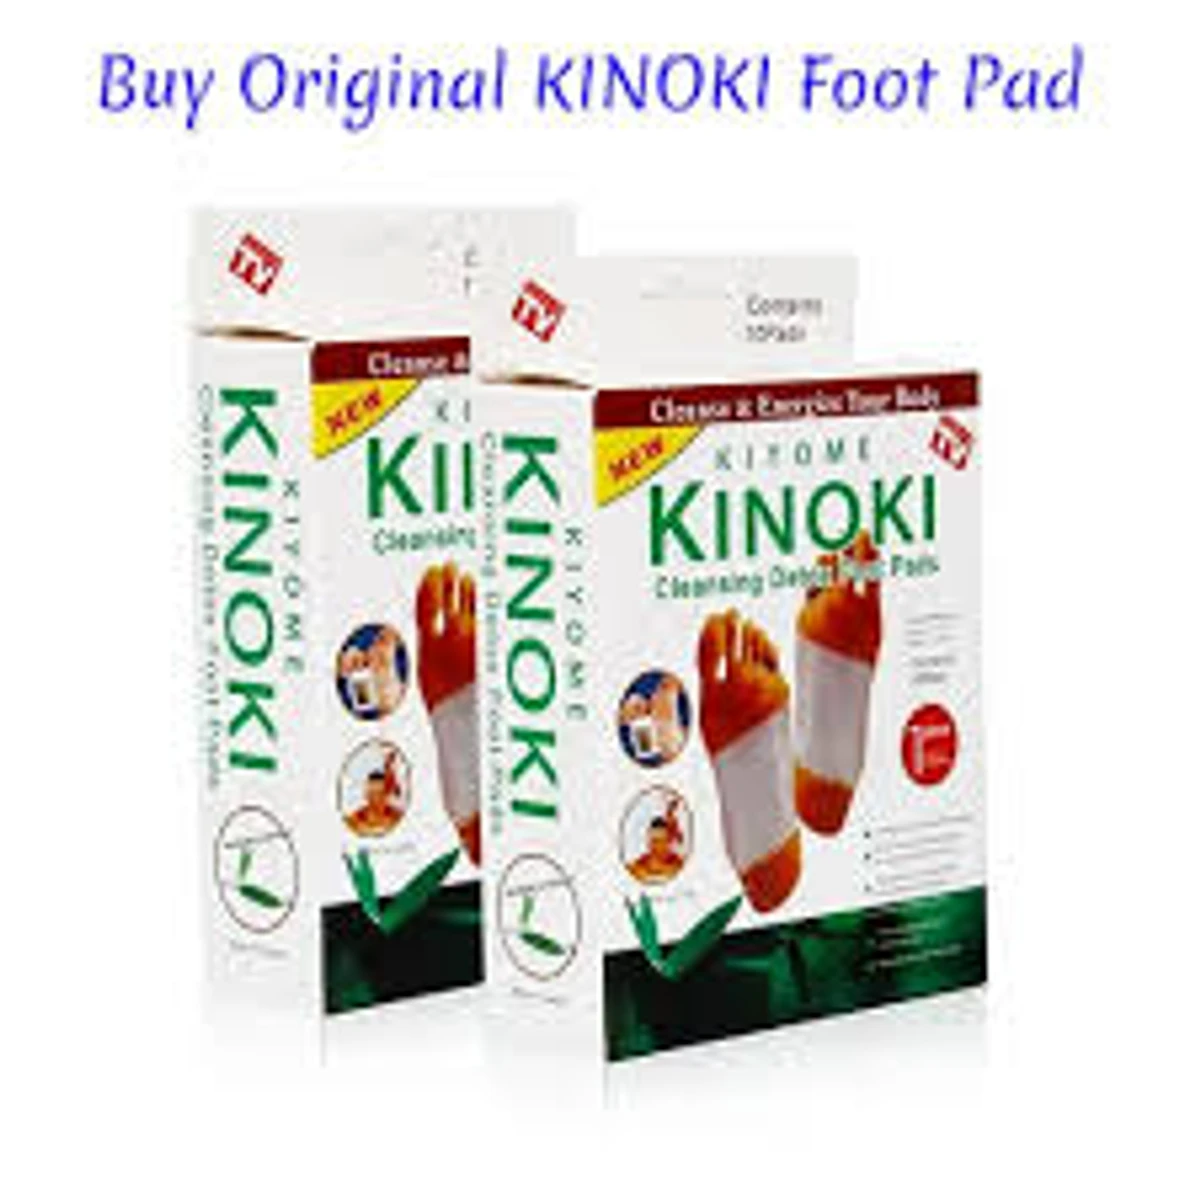 Original kinoki detox foot pad 4 Packet (40 pcs Full Course)